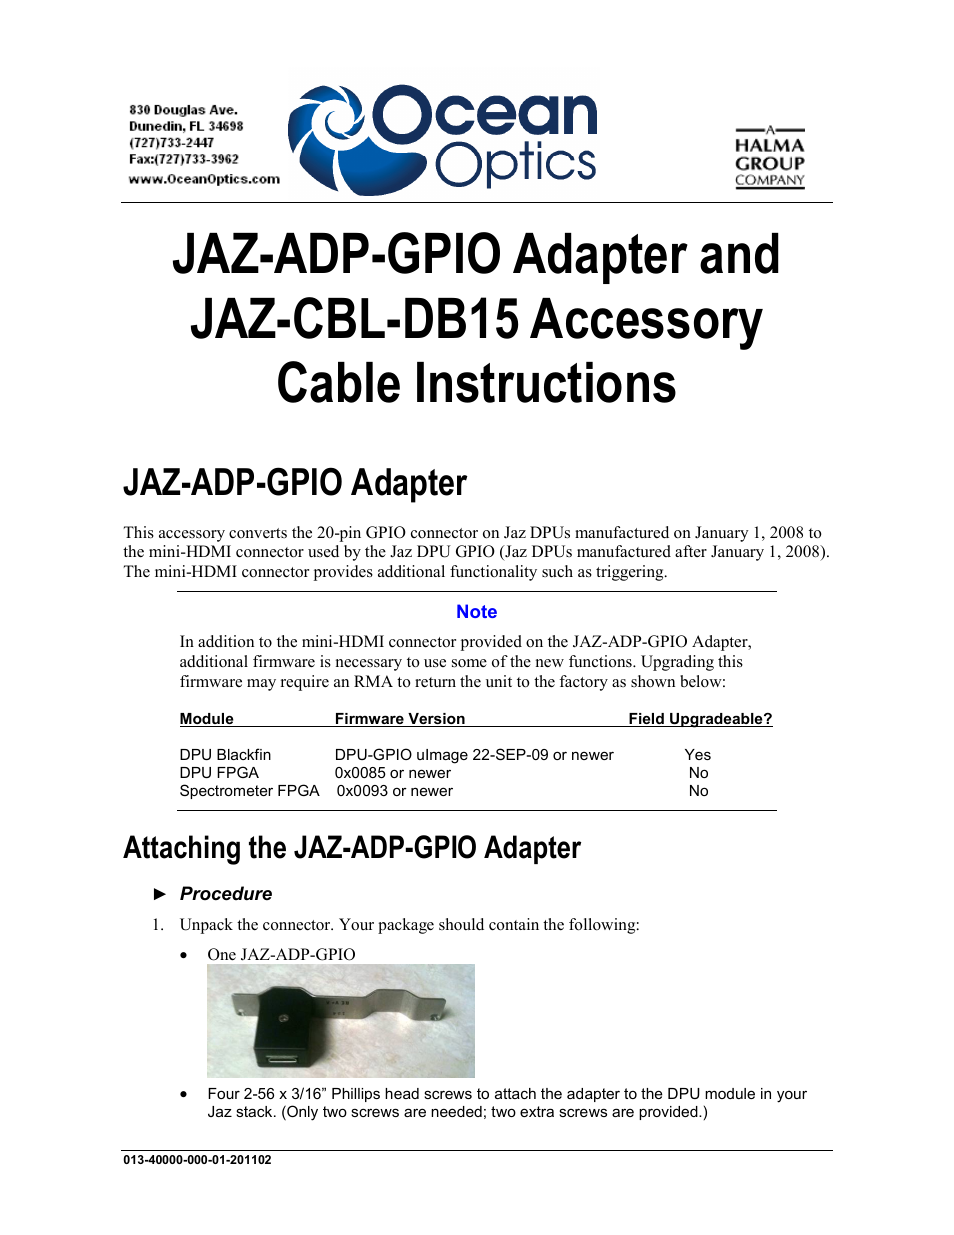 JAZ-CBL-DB15 Accessory Cable